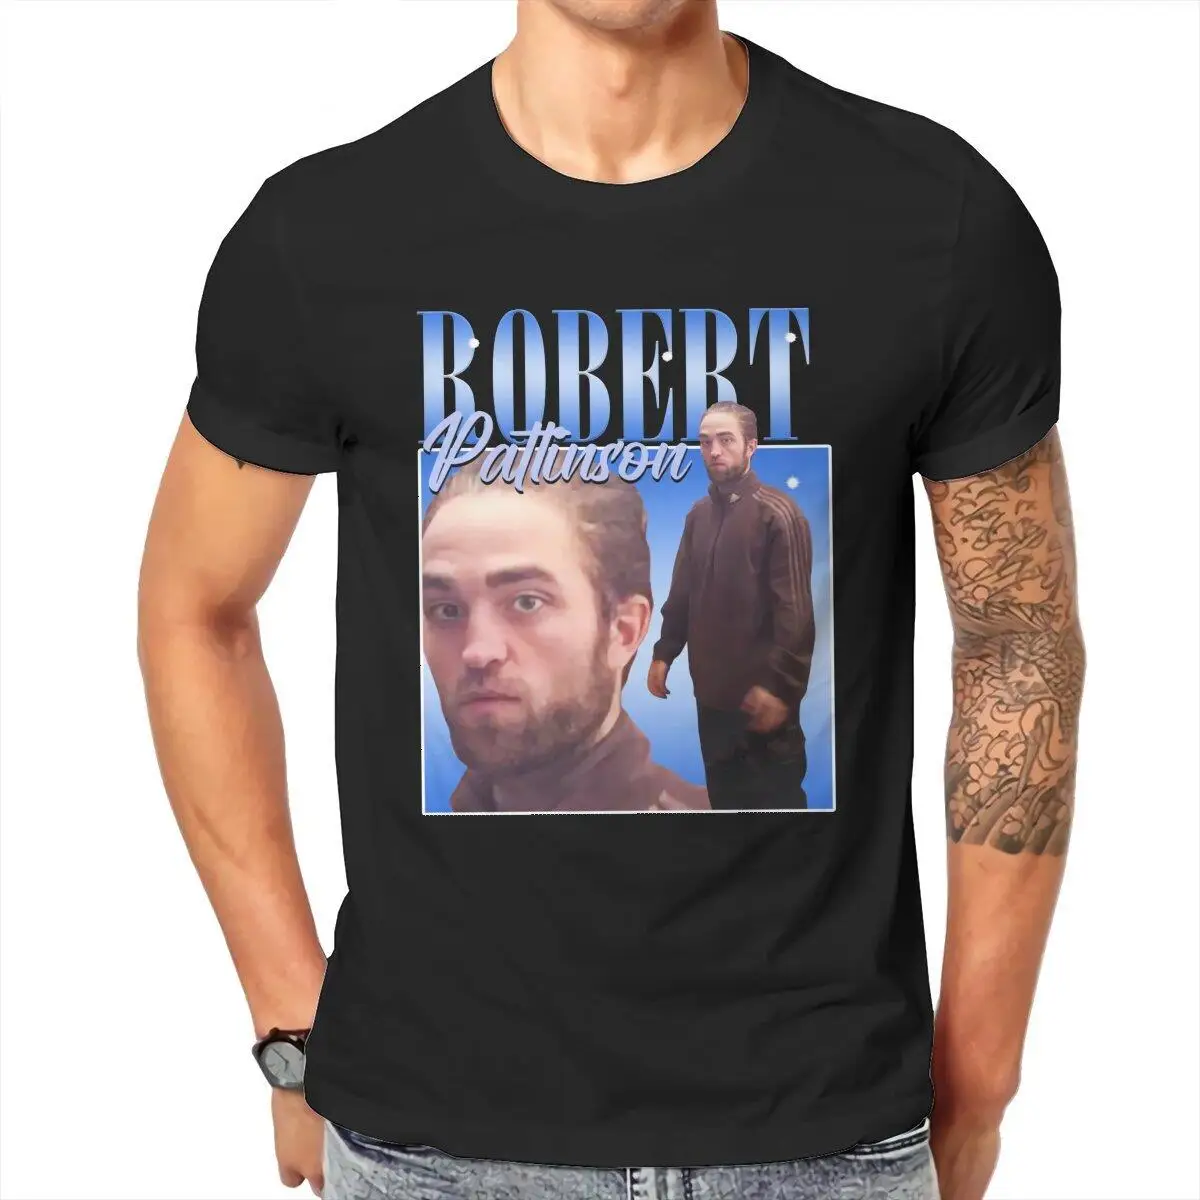 Robert Pattinson 90s Vintage  T Shirt Men's  Cotton Vintage T-Shirt O Neck  Tee Shirt Short Sleeve Clothing Gift Idea